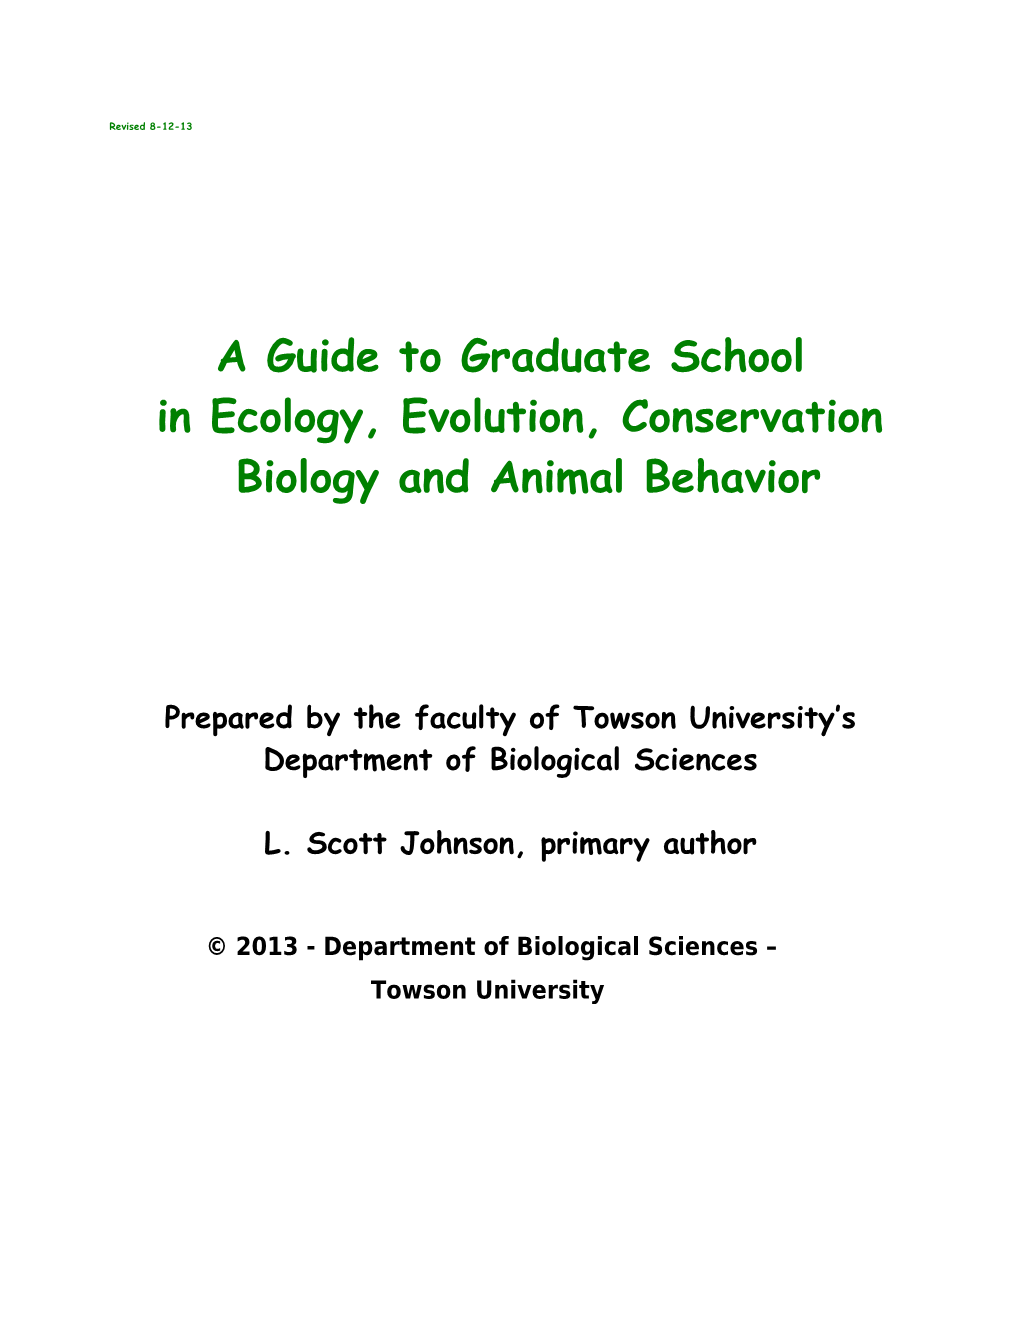 In Ecology, Evolution, Conservation Biology and Animal Behavior